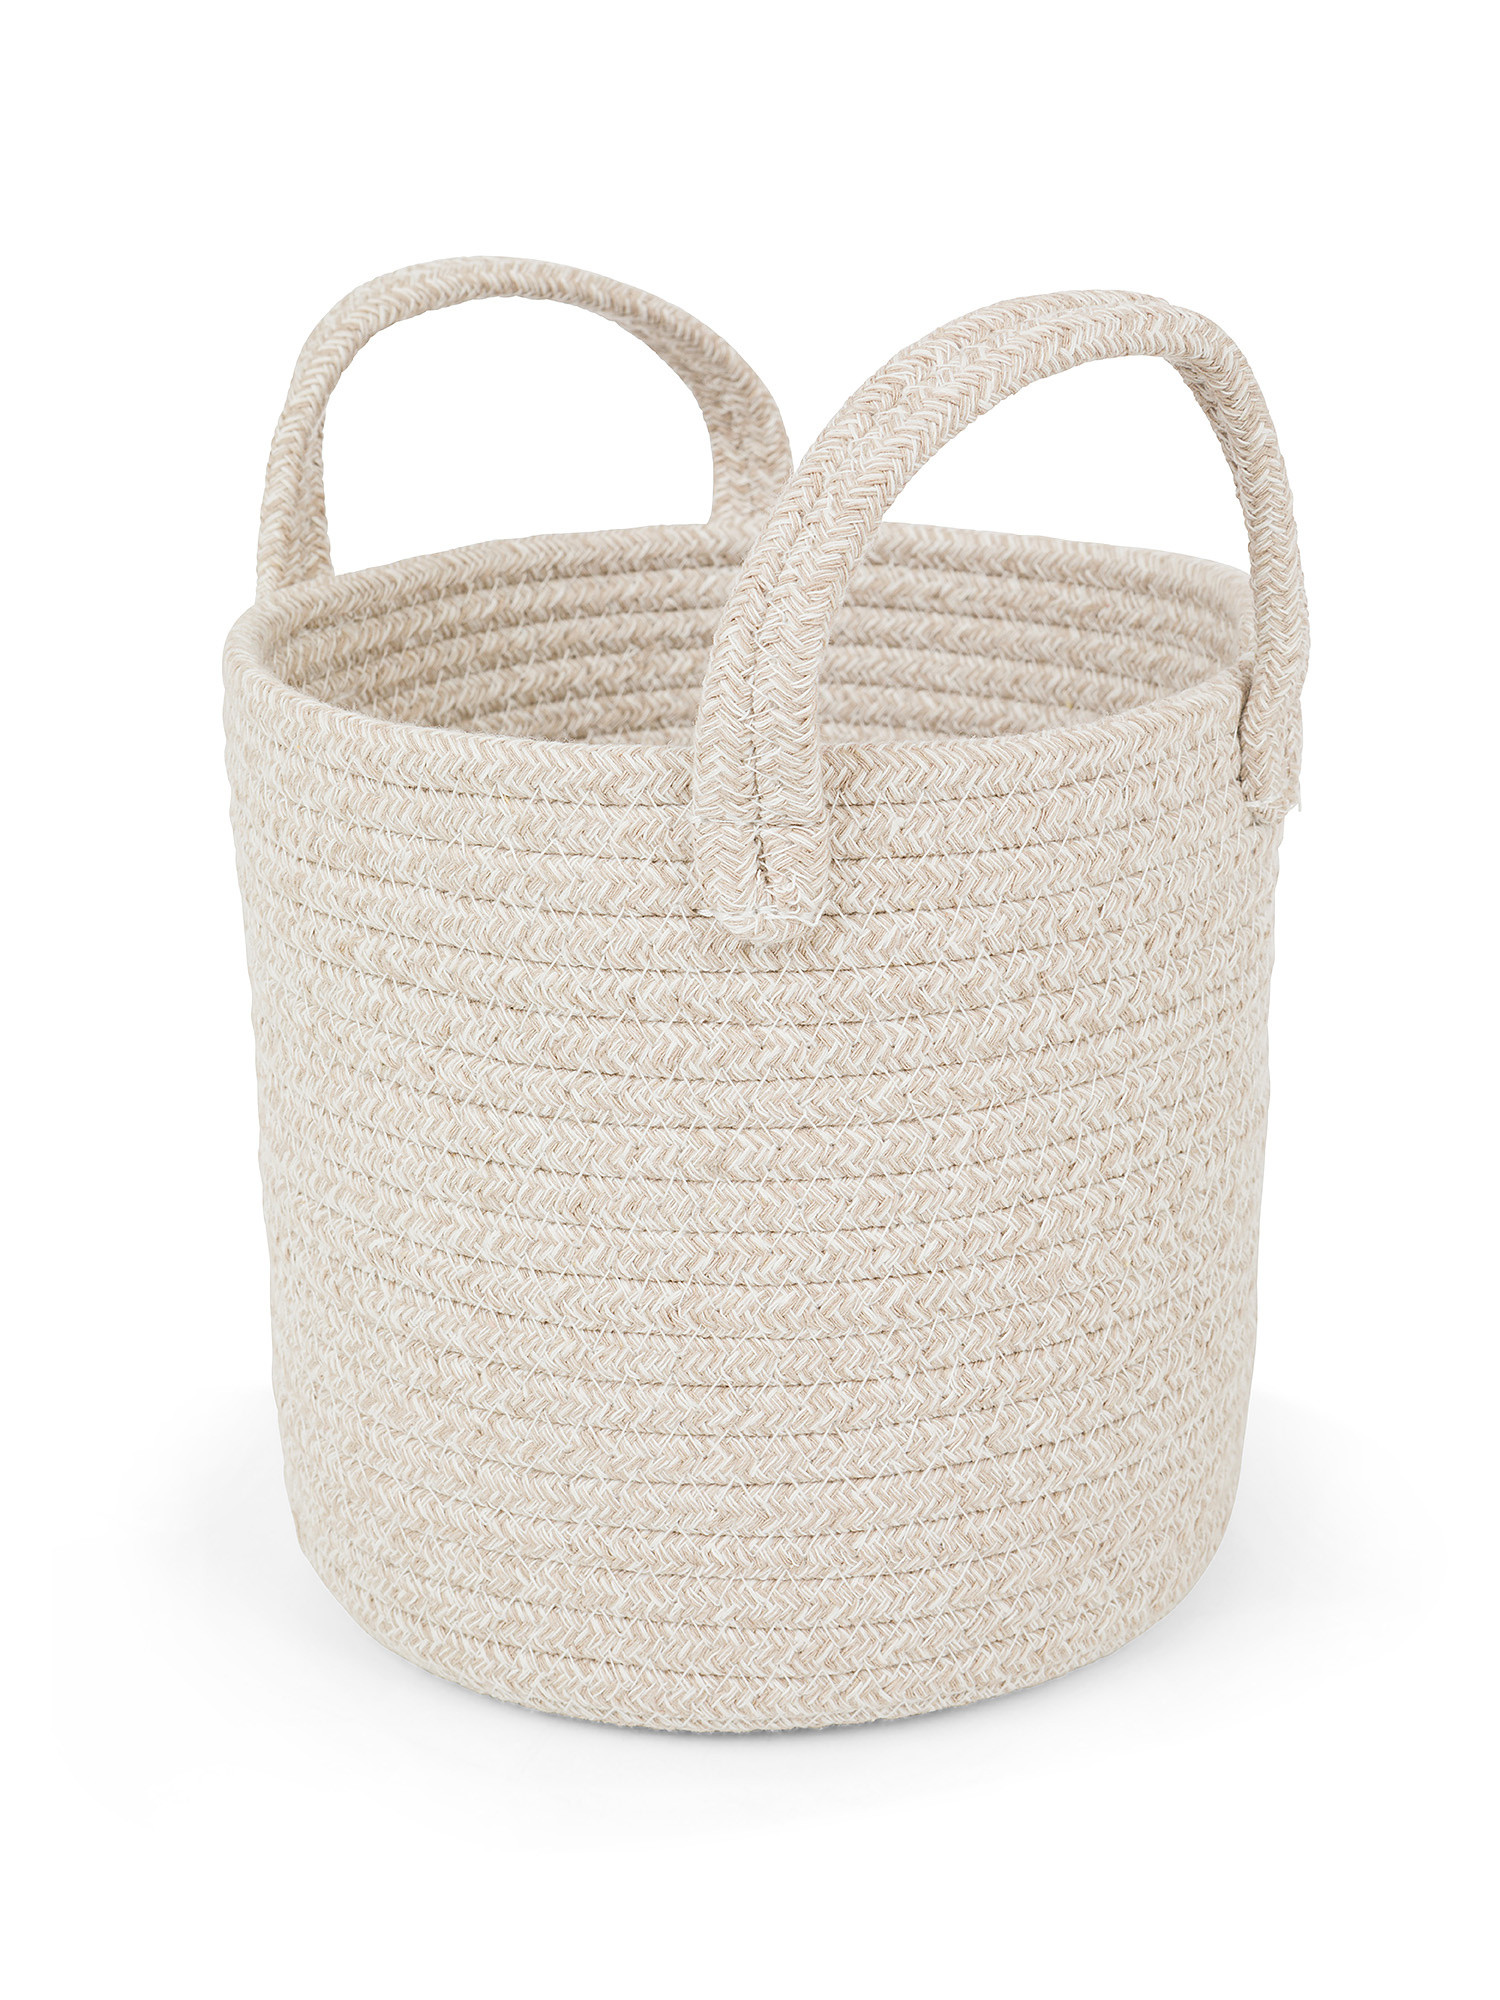 Rope basket with handles, Beige, large image number 1